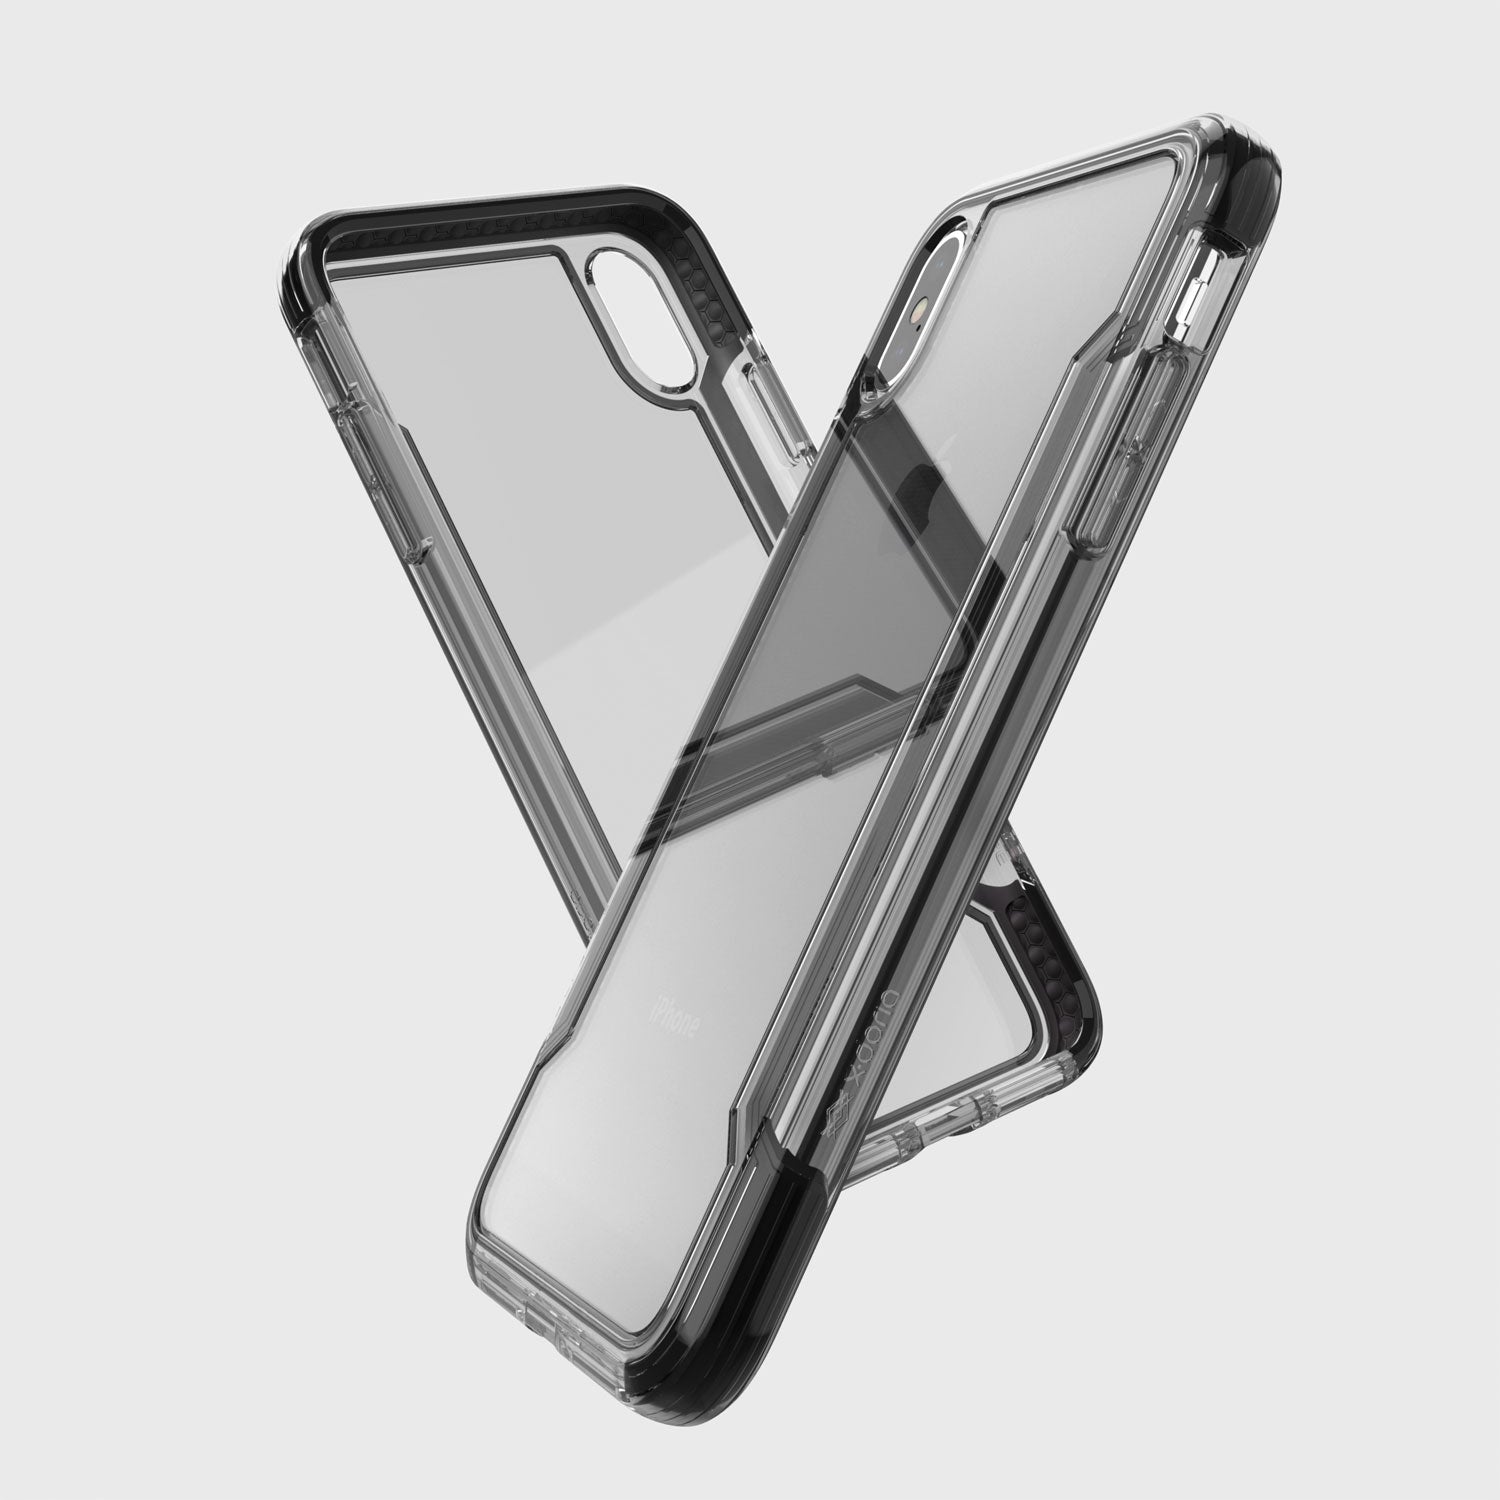 iPhone X/XS Case - CLEAR